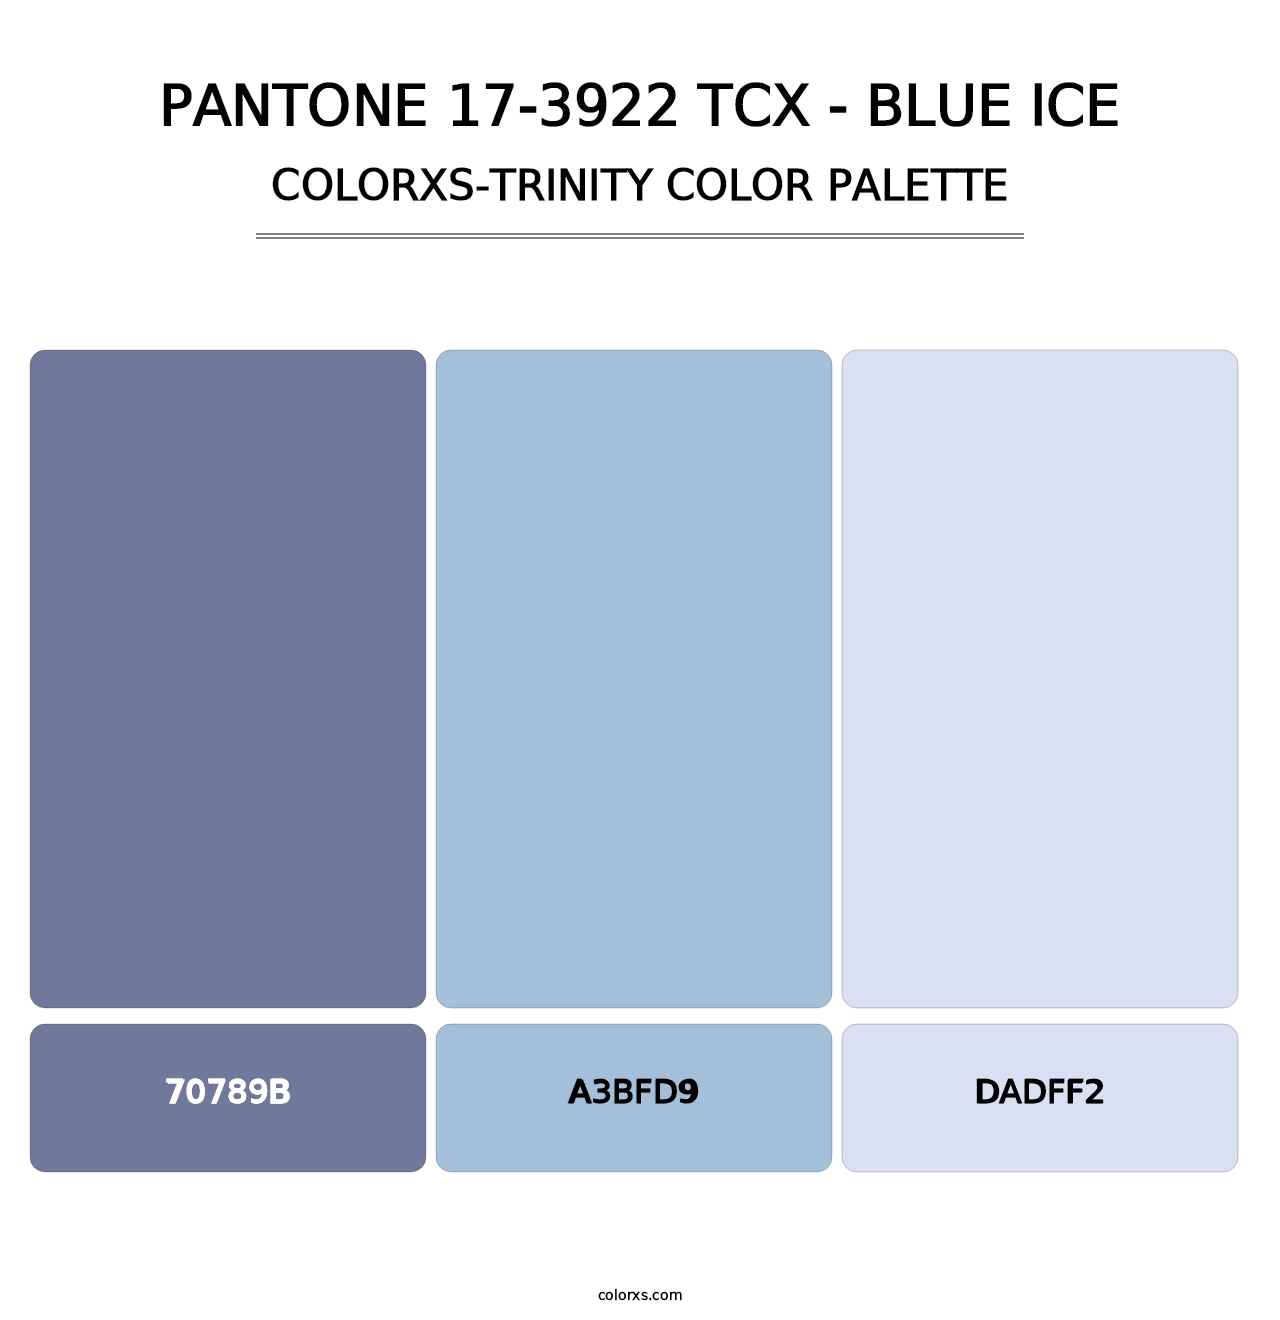 PANTONE 17-3922 TCX - Blue Ice - Colorxs Trinity Palette